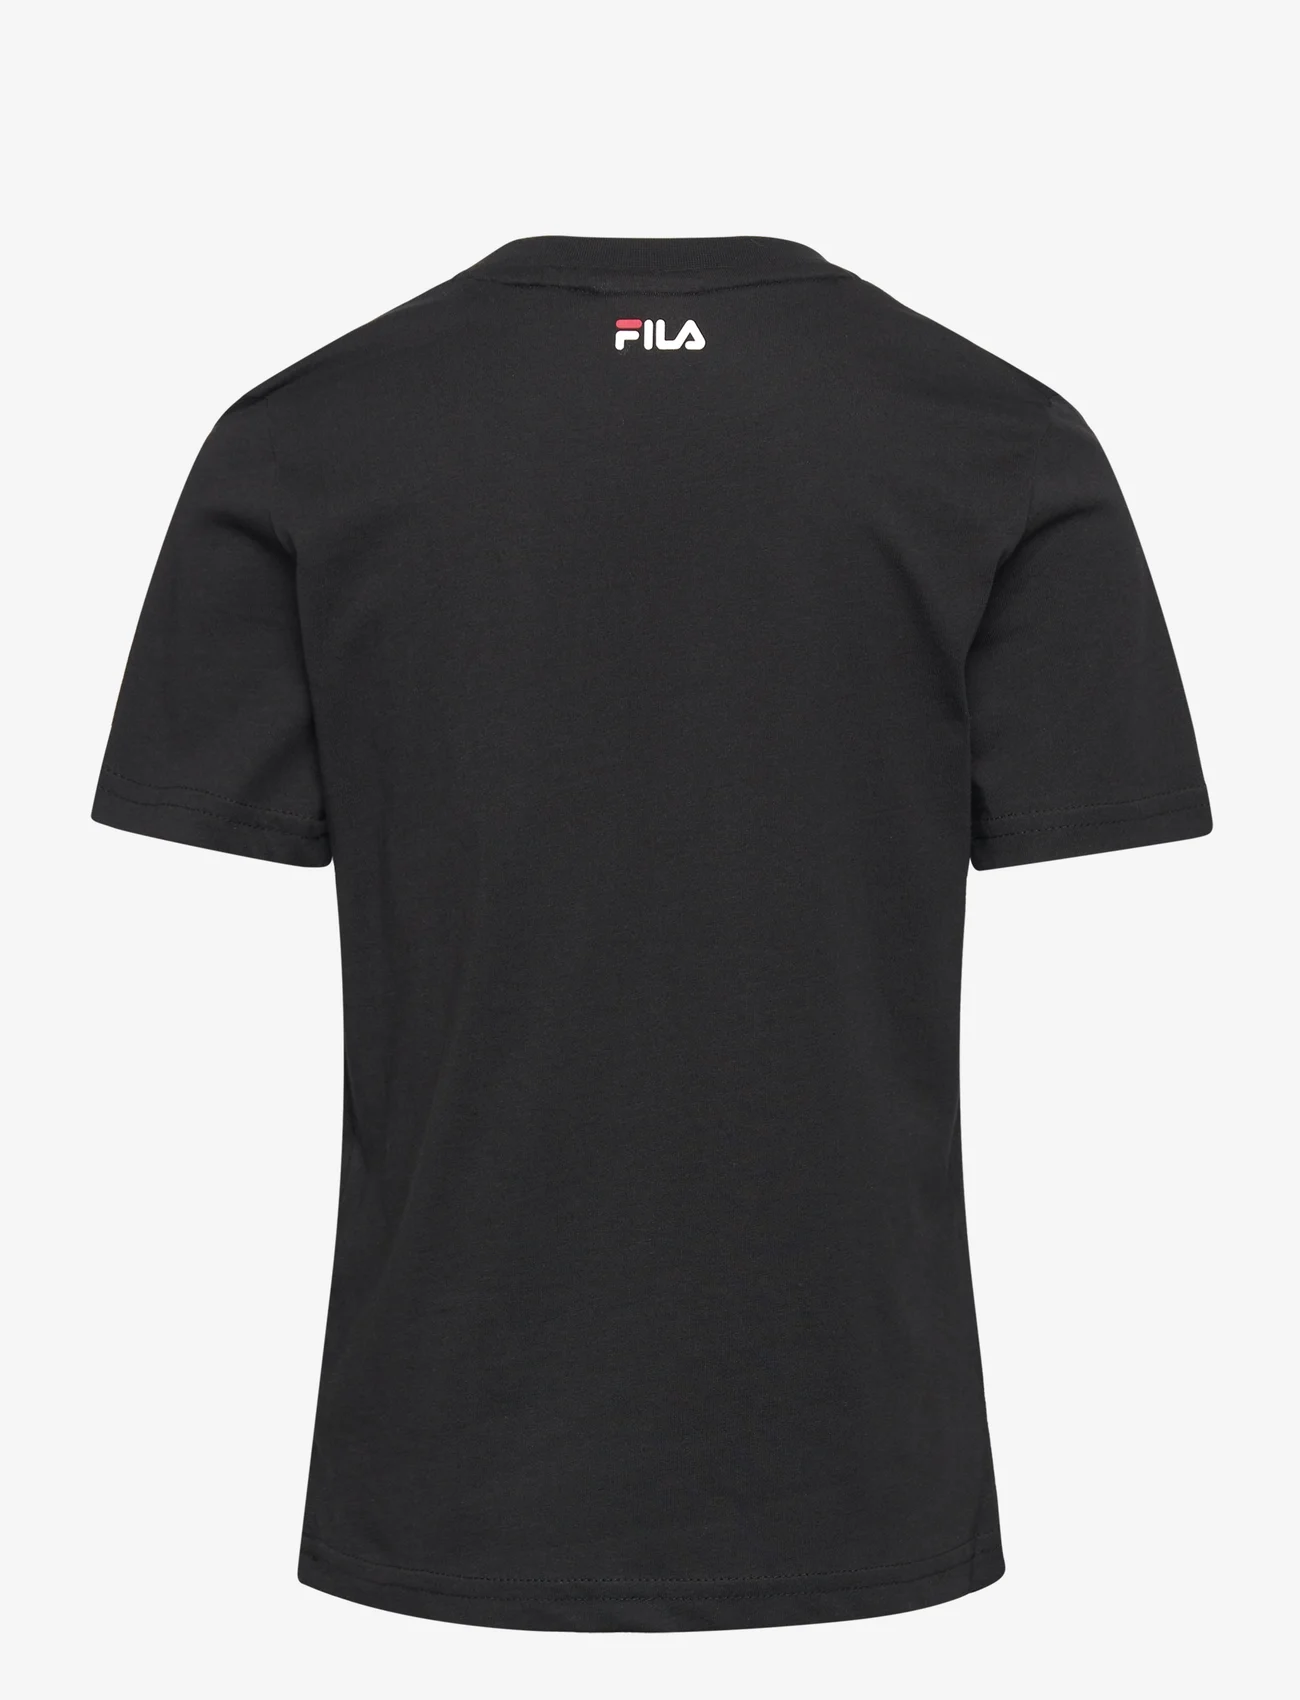 FILA - BAIA MARE classic logo tee - lyhythihaiset - black - 1